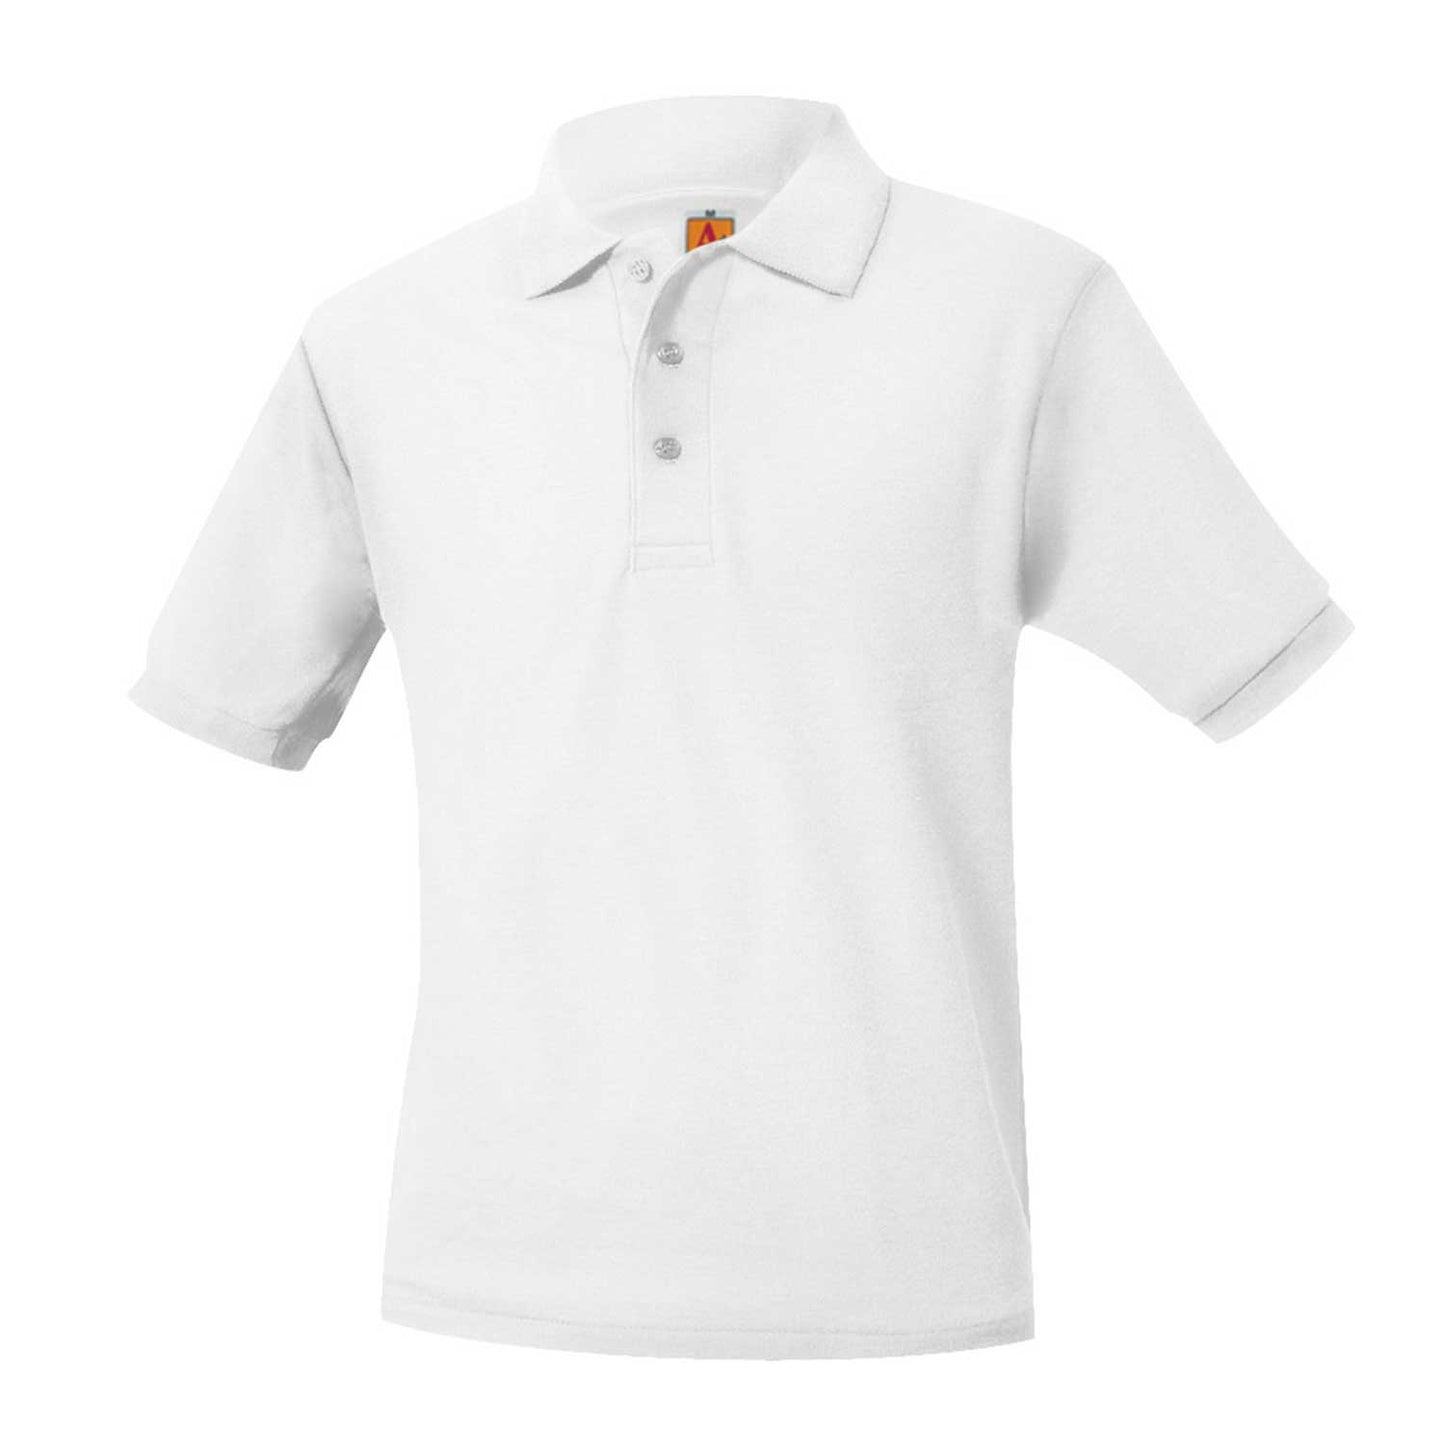 Men's/Unisex Pique Polo Shirt, Short Sleeves, Ribbed Cuffs - 1206